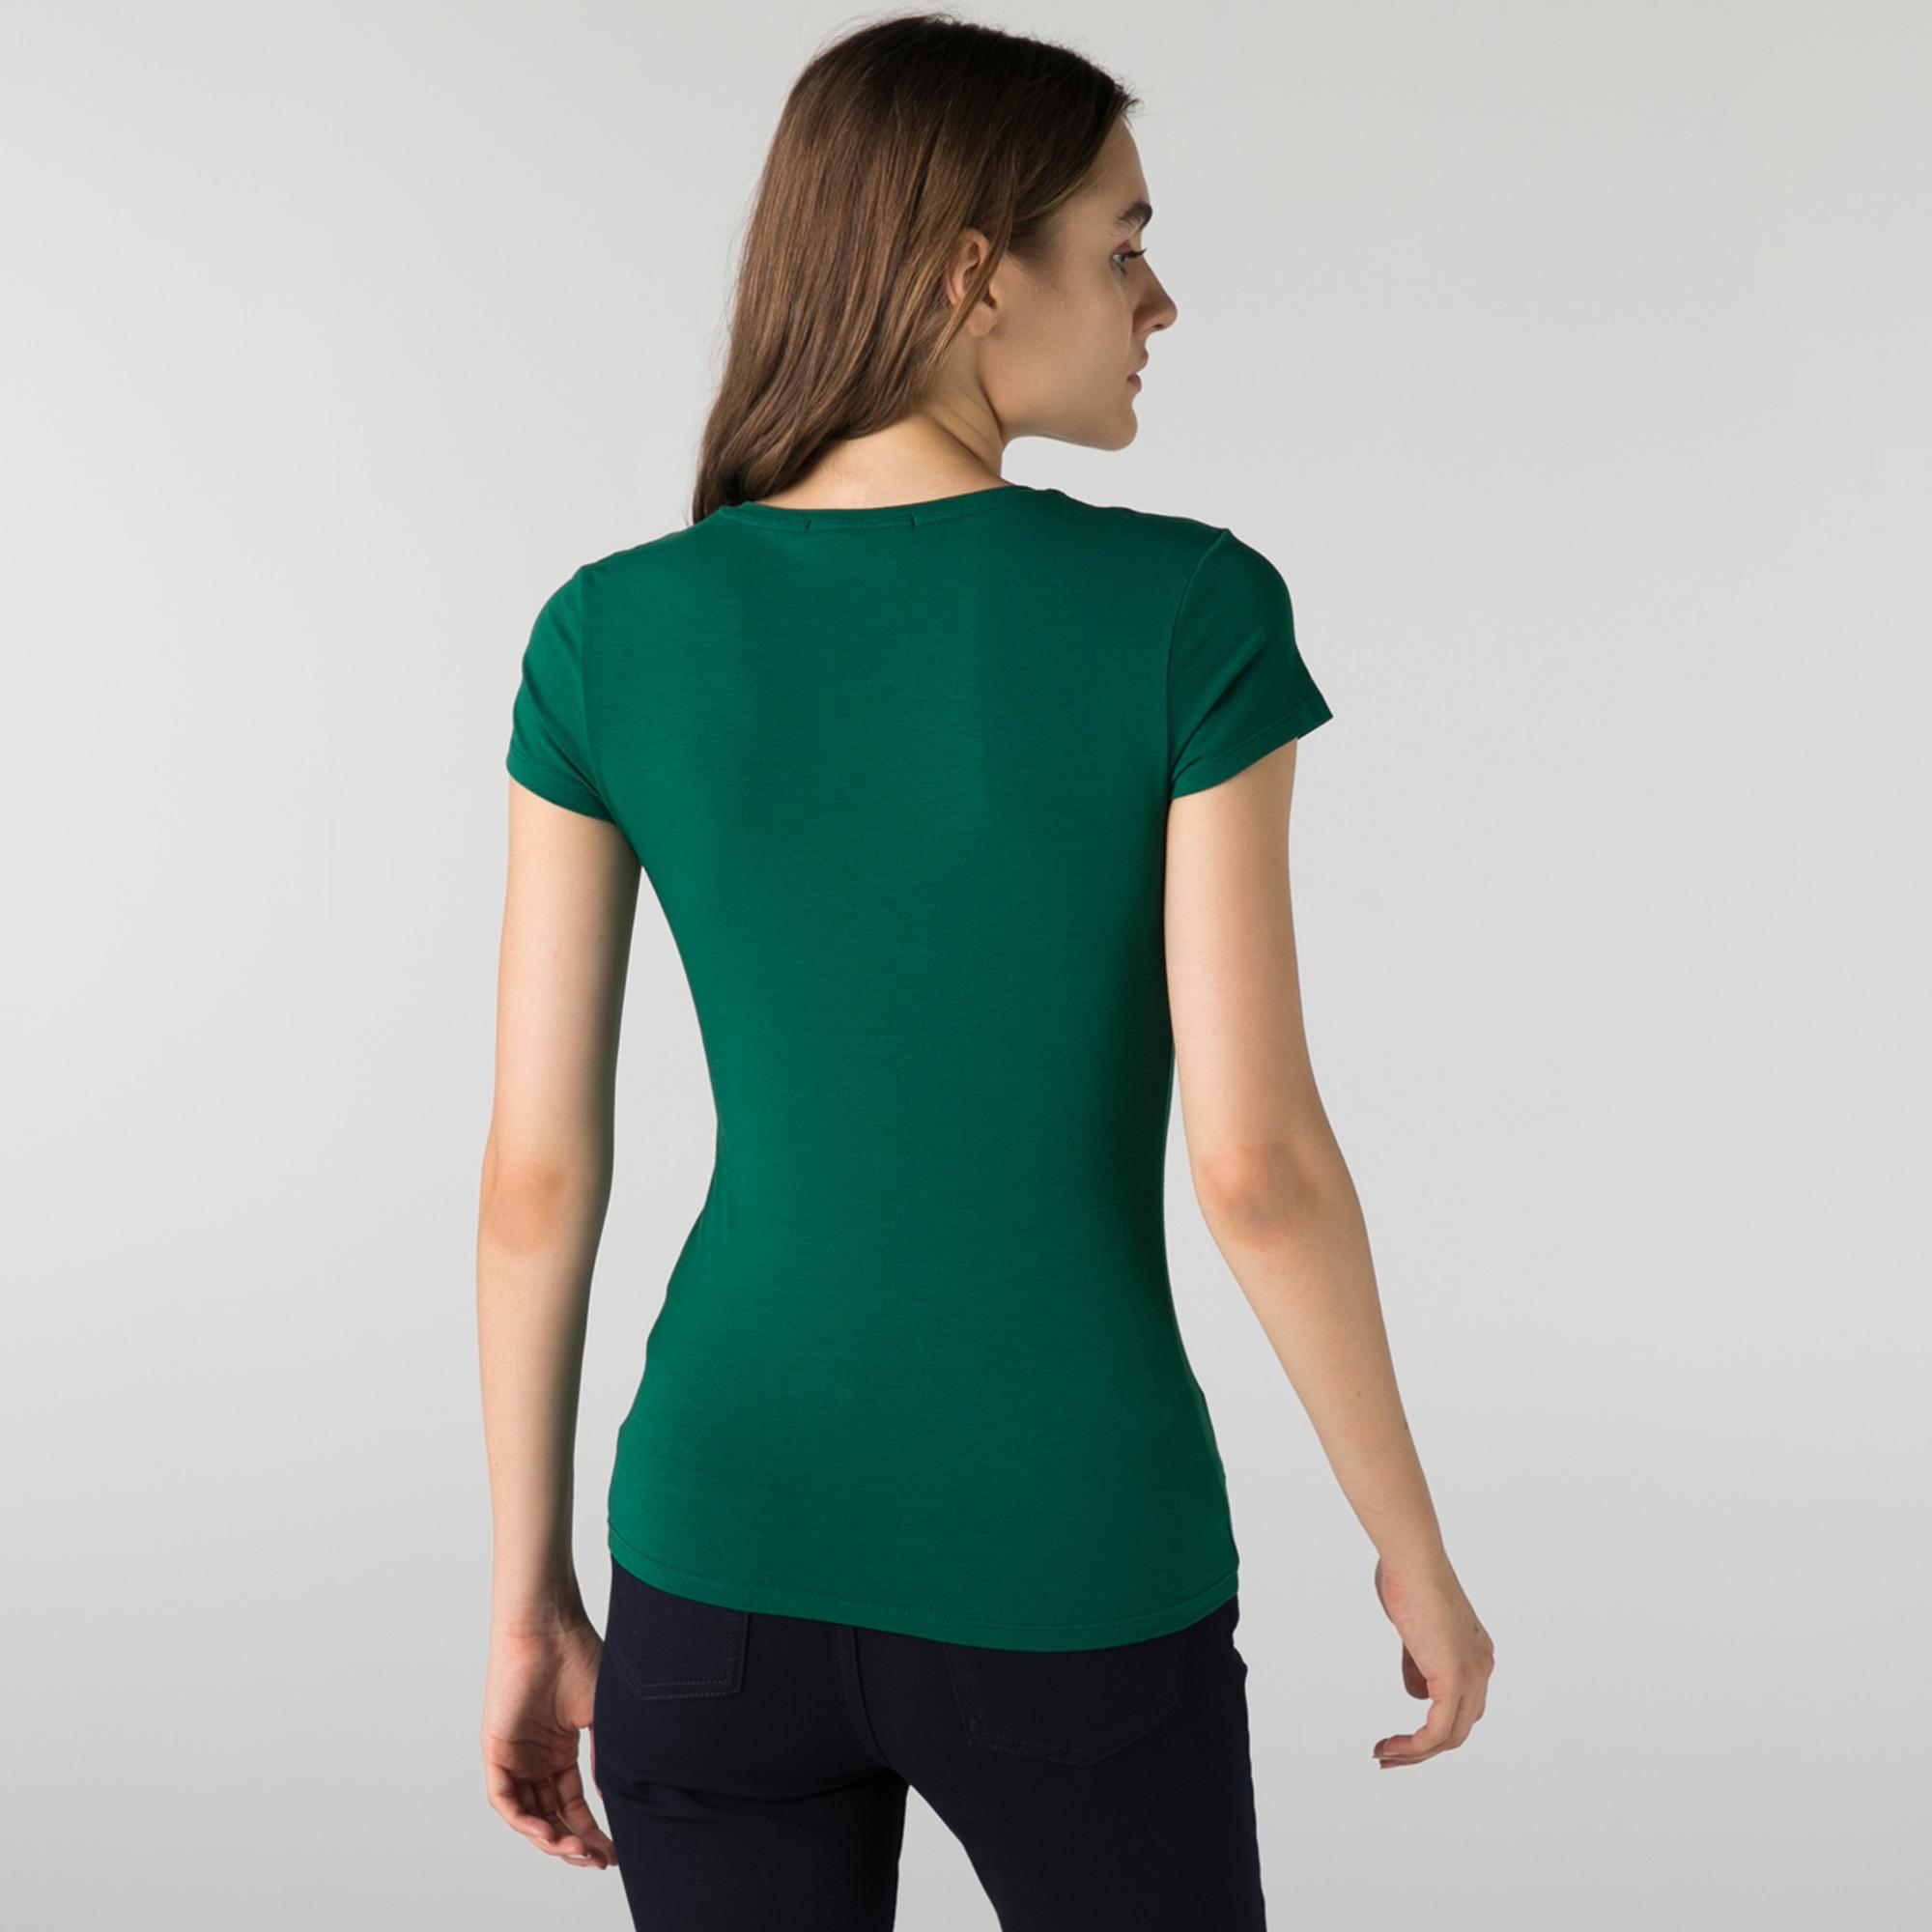 Lacoste Kadın Slim Fit V Yaka Yeşil T-Shirt. 3